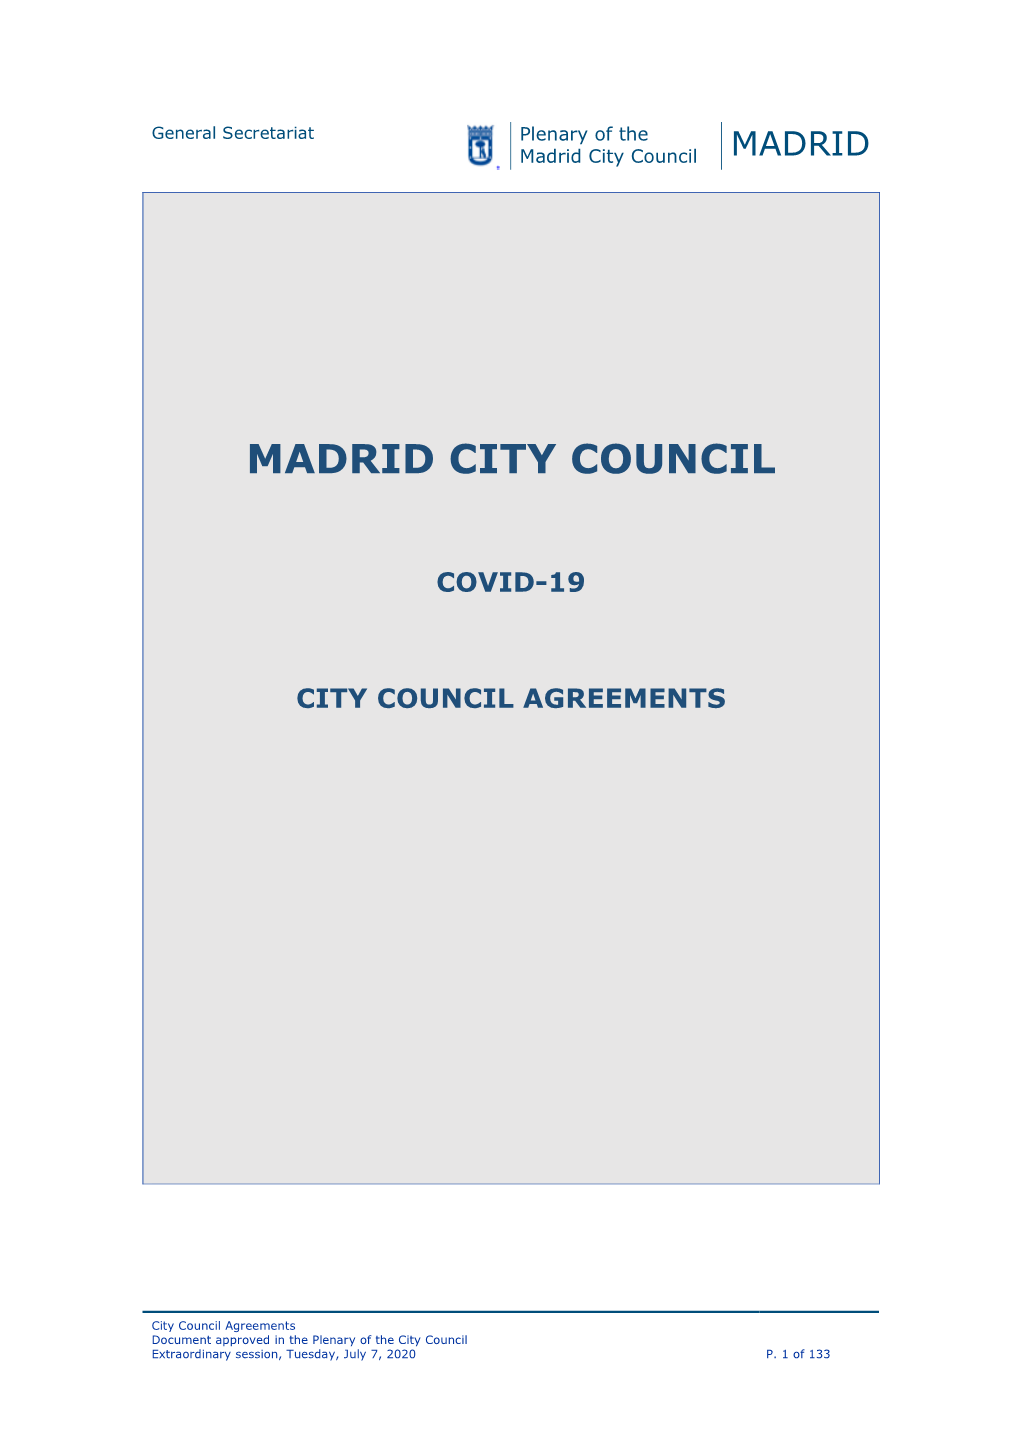 MADRID Madrid City Council